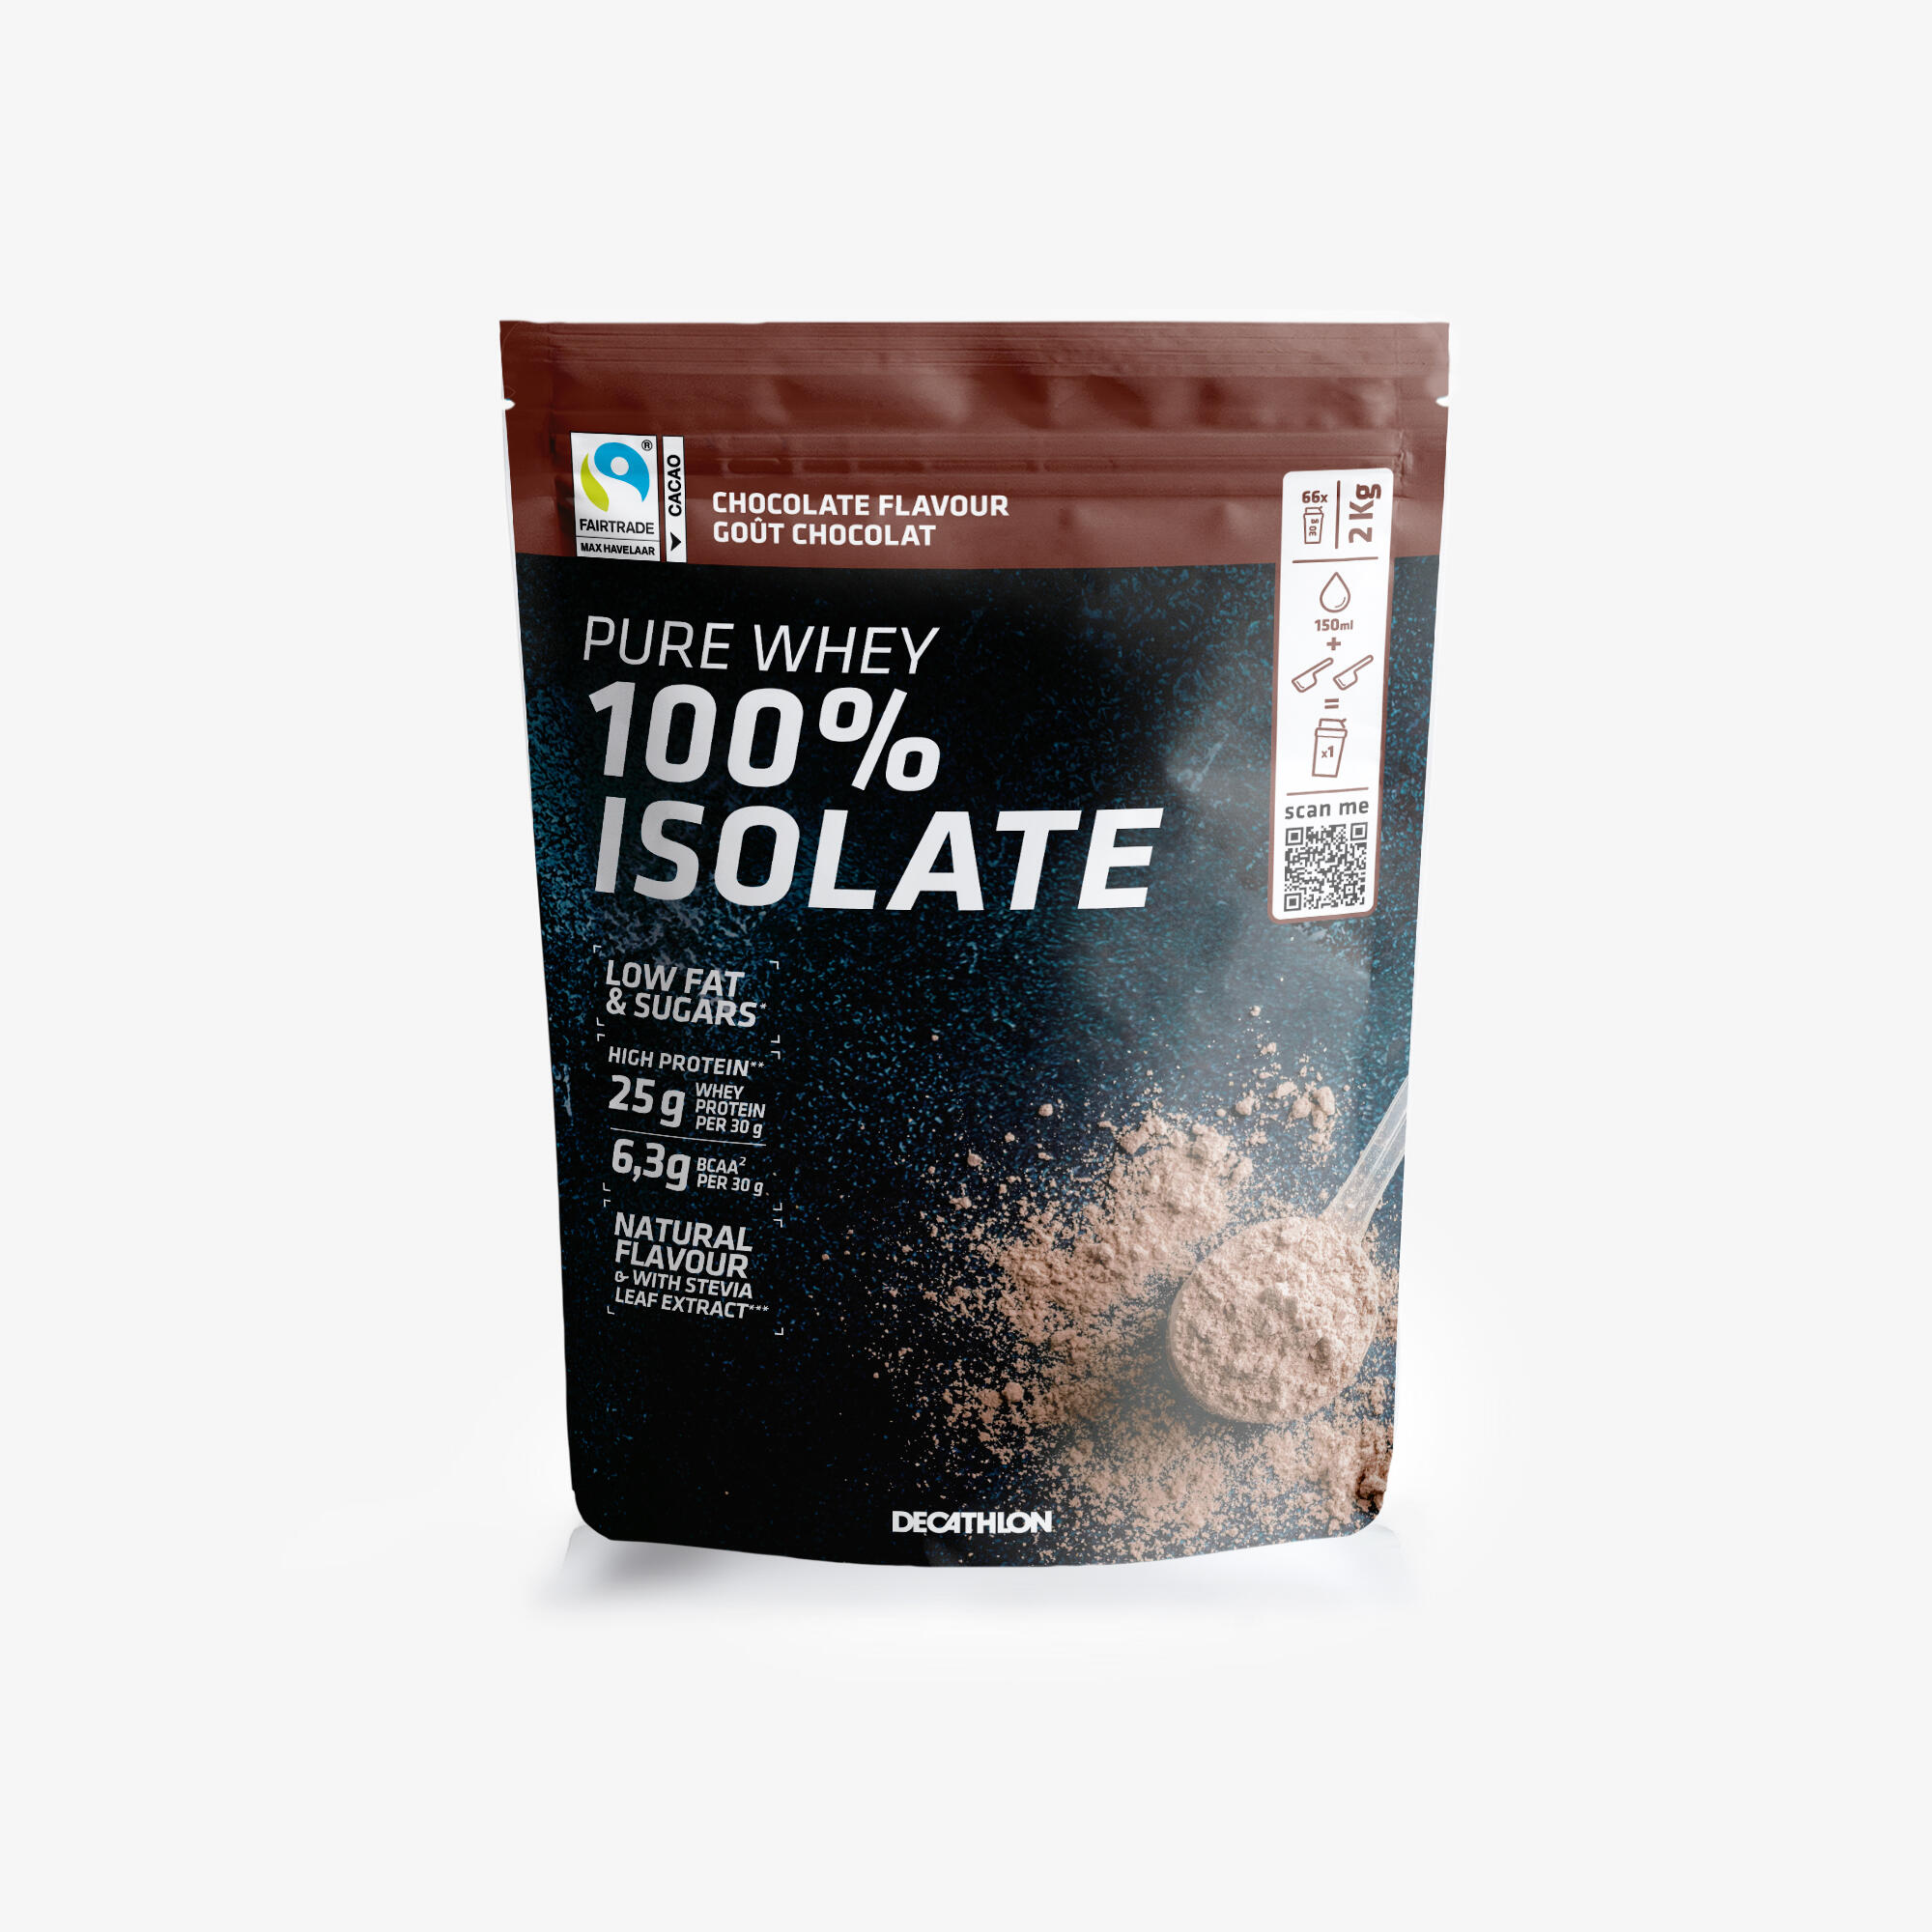 CORENGTH Pure Whey 100% Isolate Go&#xFB;t Chocolat, 2kg -